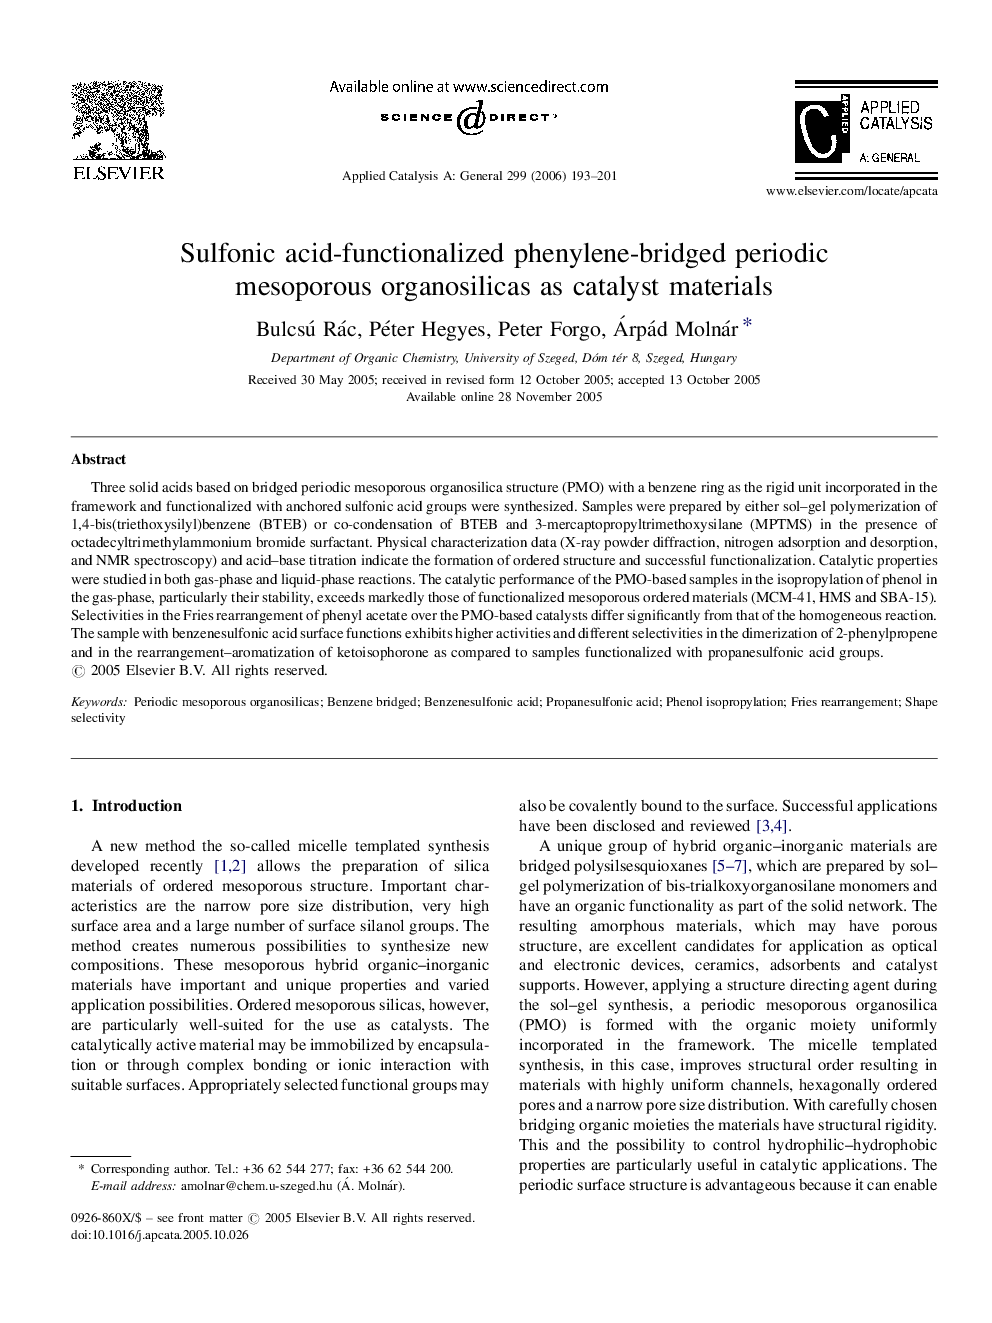 Sulfonic acid-functionalized phenylene-bridged periodic mesoporous organosilicas as catalyst materials